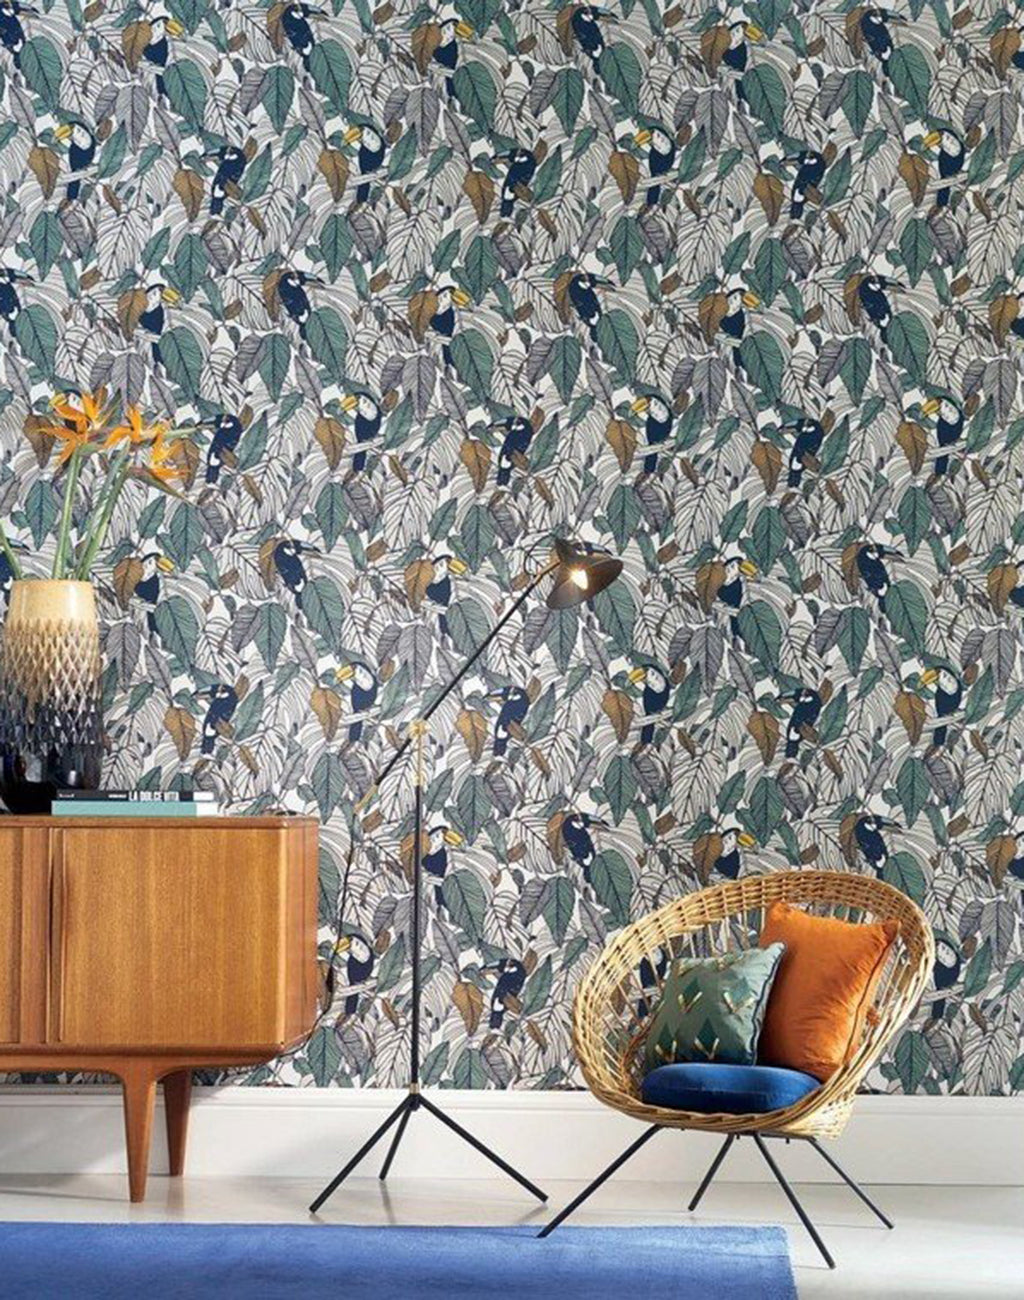 Toucan Wallpaper